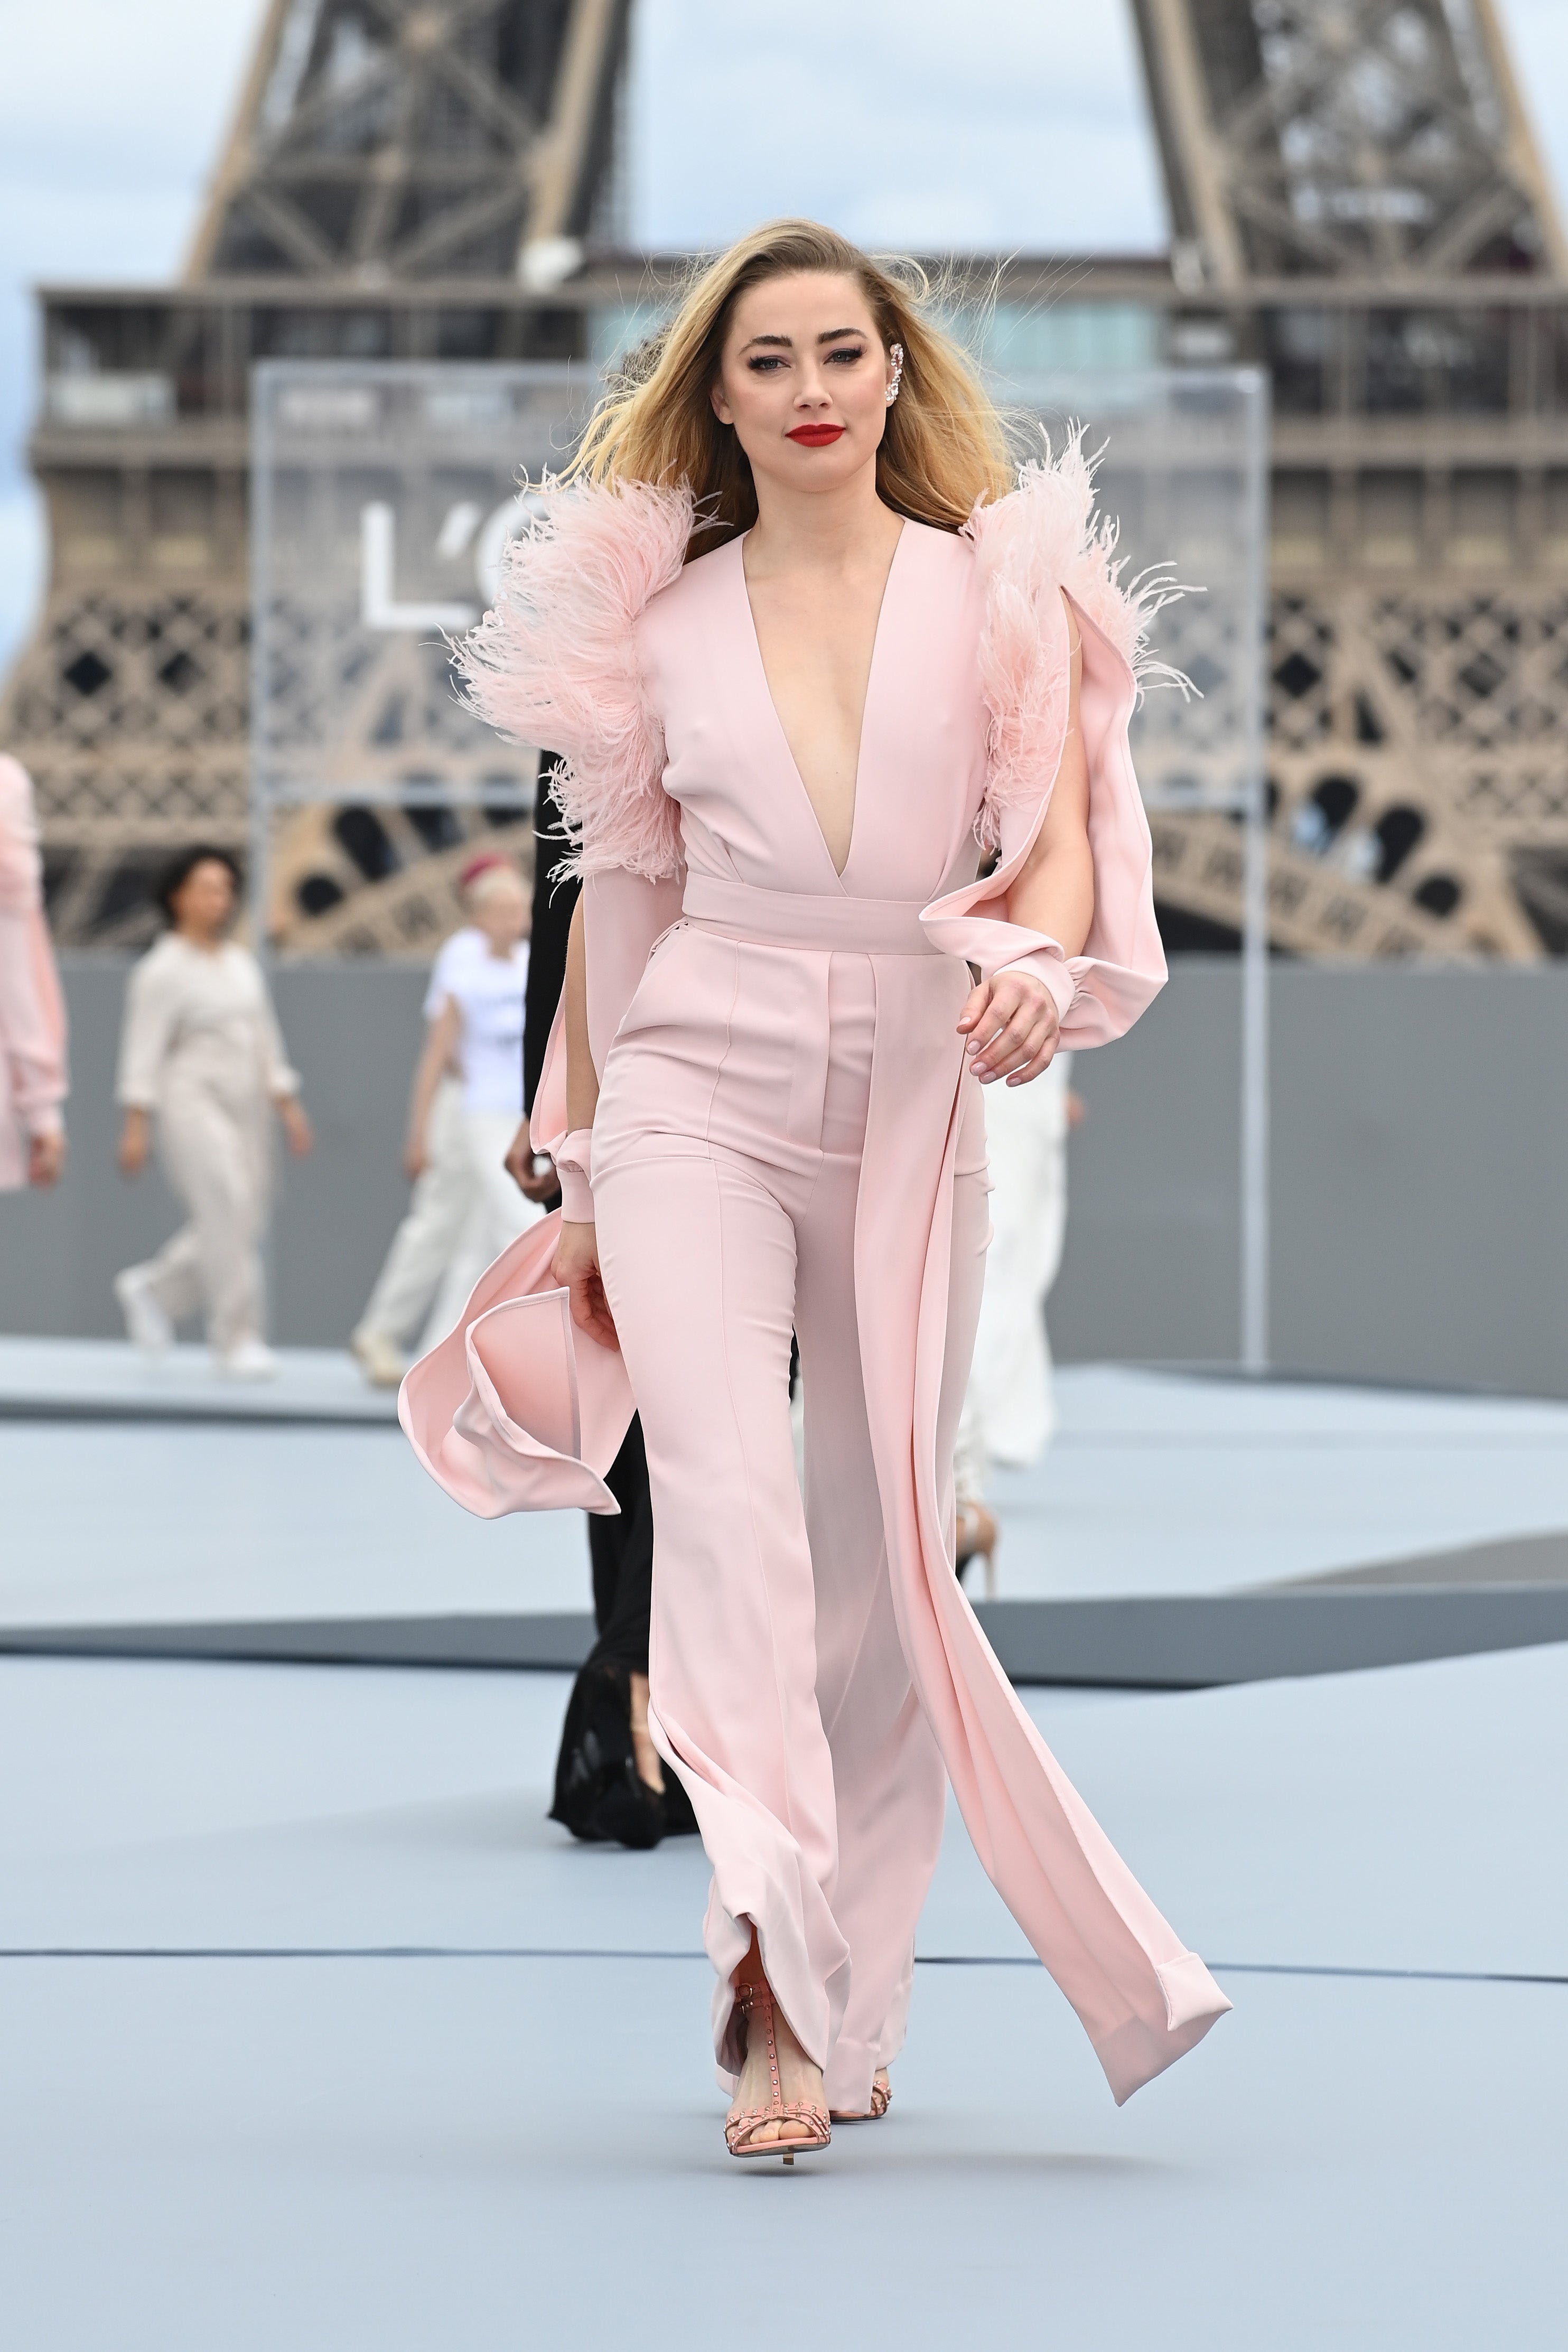 Amber Heard walks the runway as part of Paris Fashion Week on 3 October 2021 in Paris, France